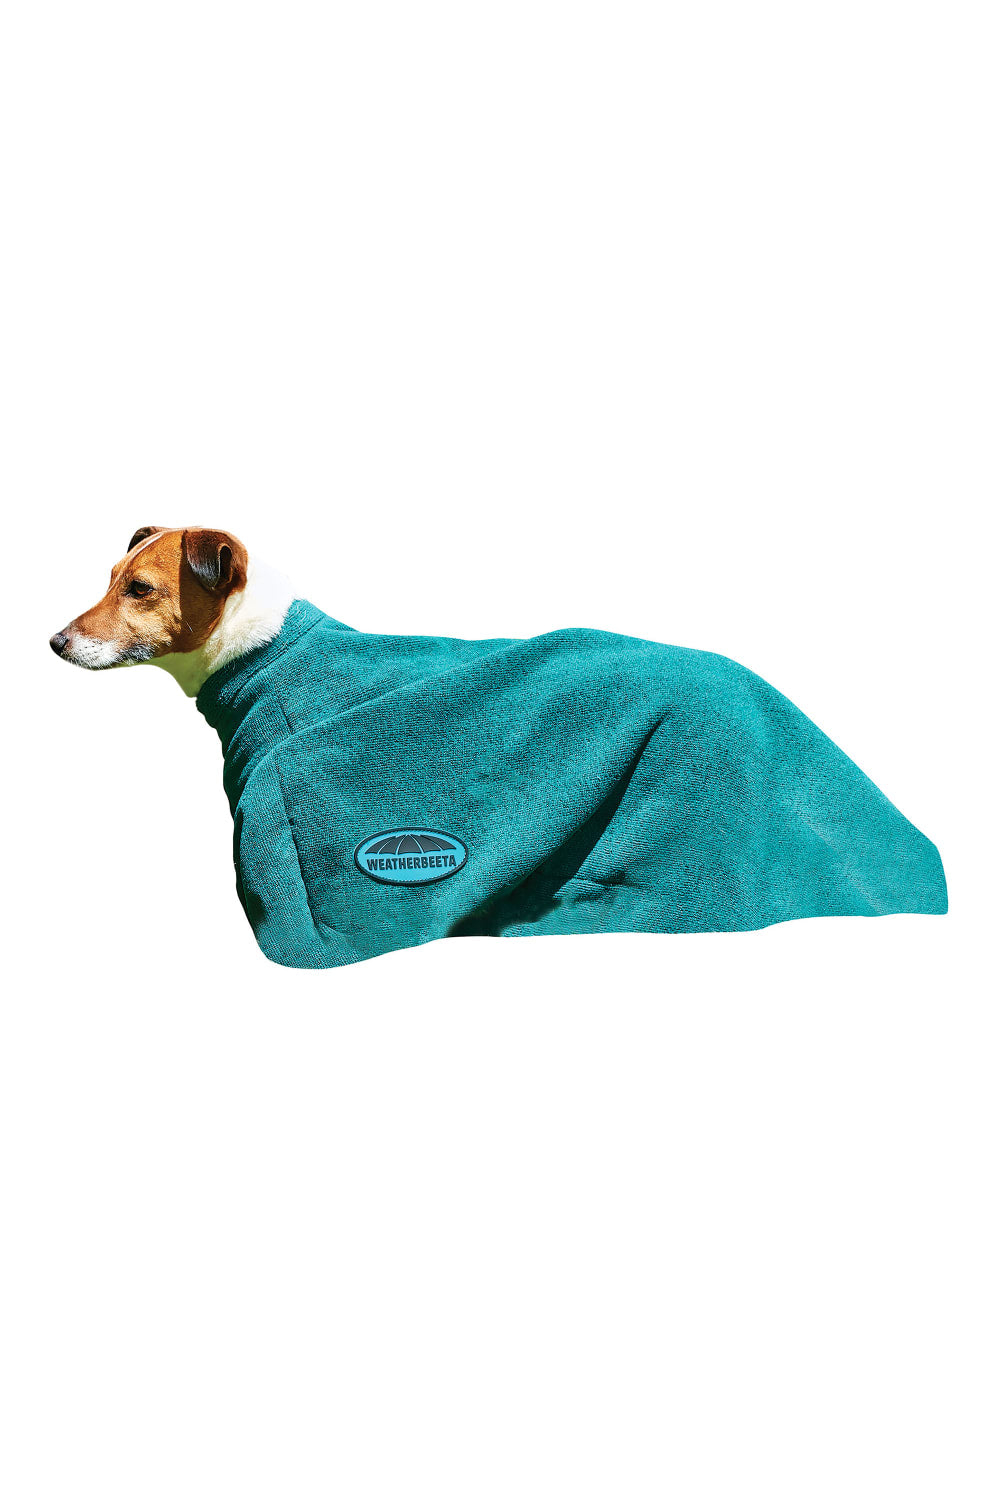 Weatherbeeta Dry-dog Bag (Hunter Green) (3XL)